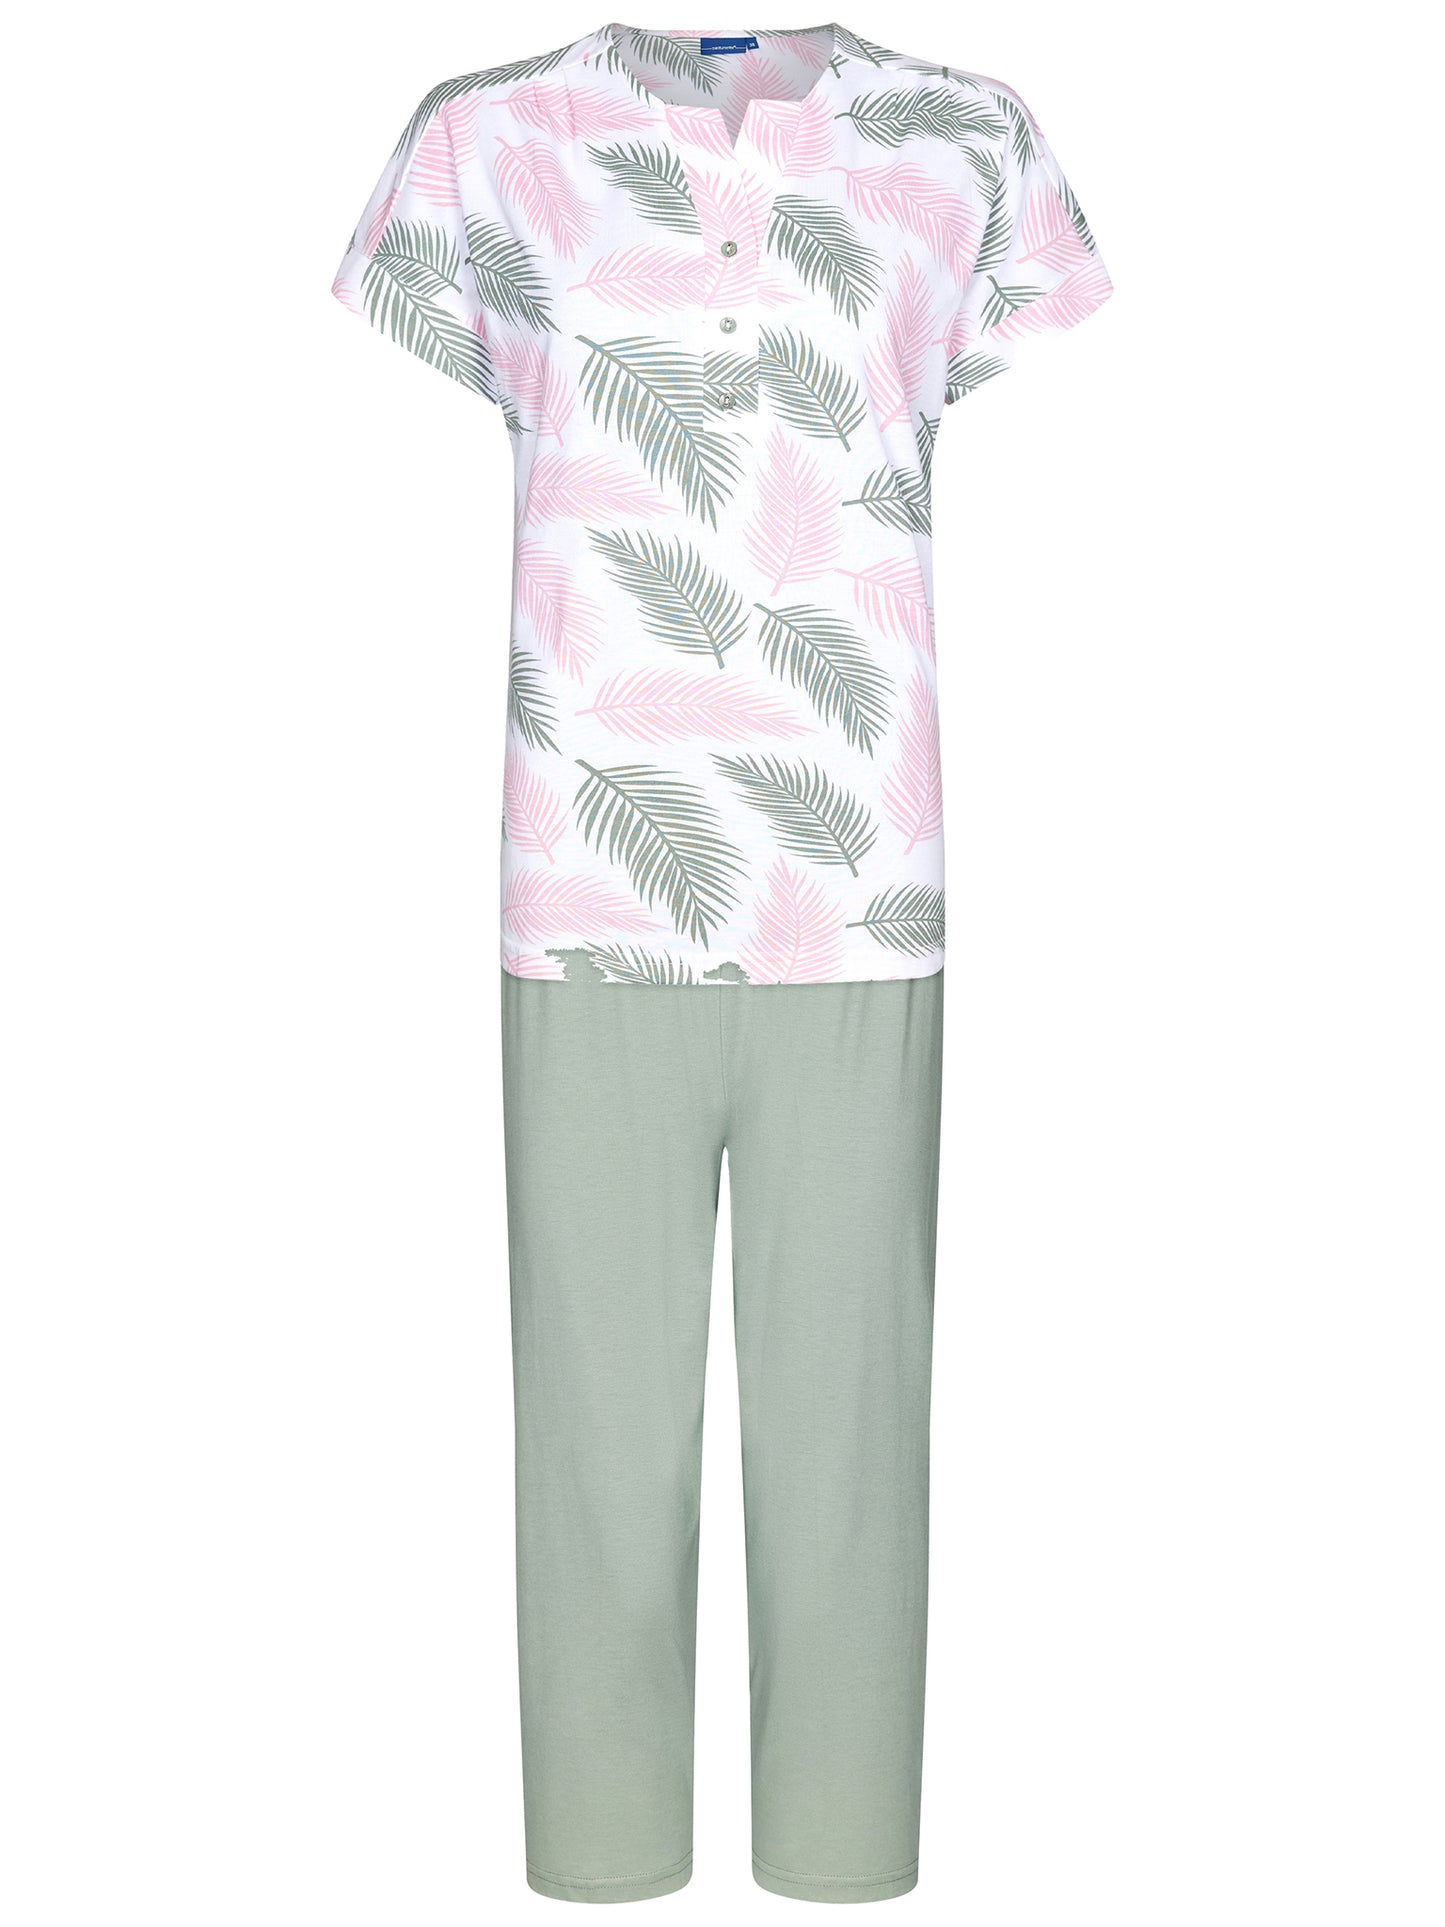 Pyjama capri pants 20241-154-4 203 light